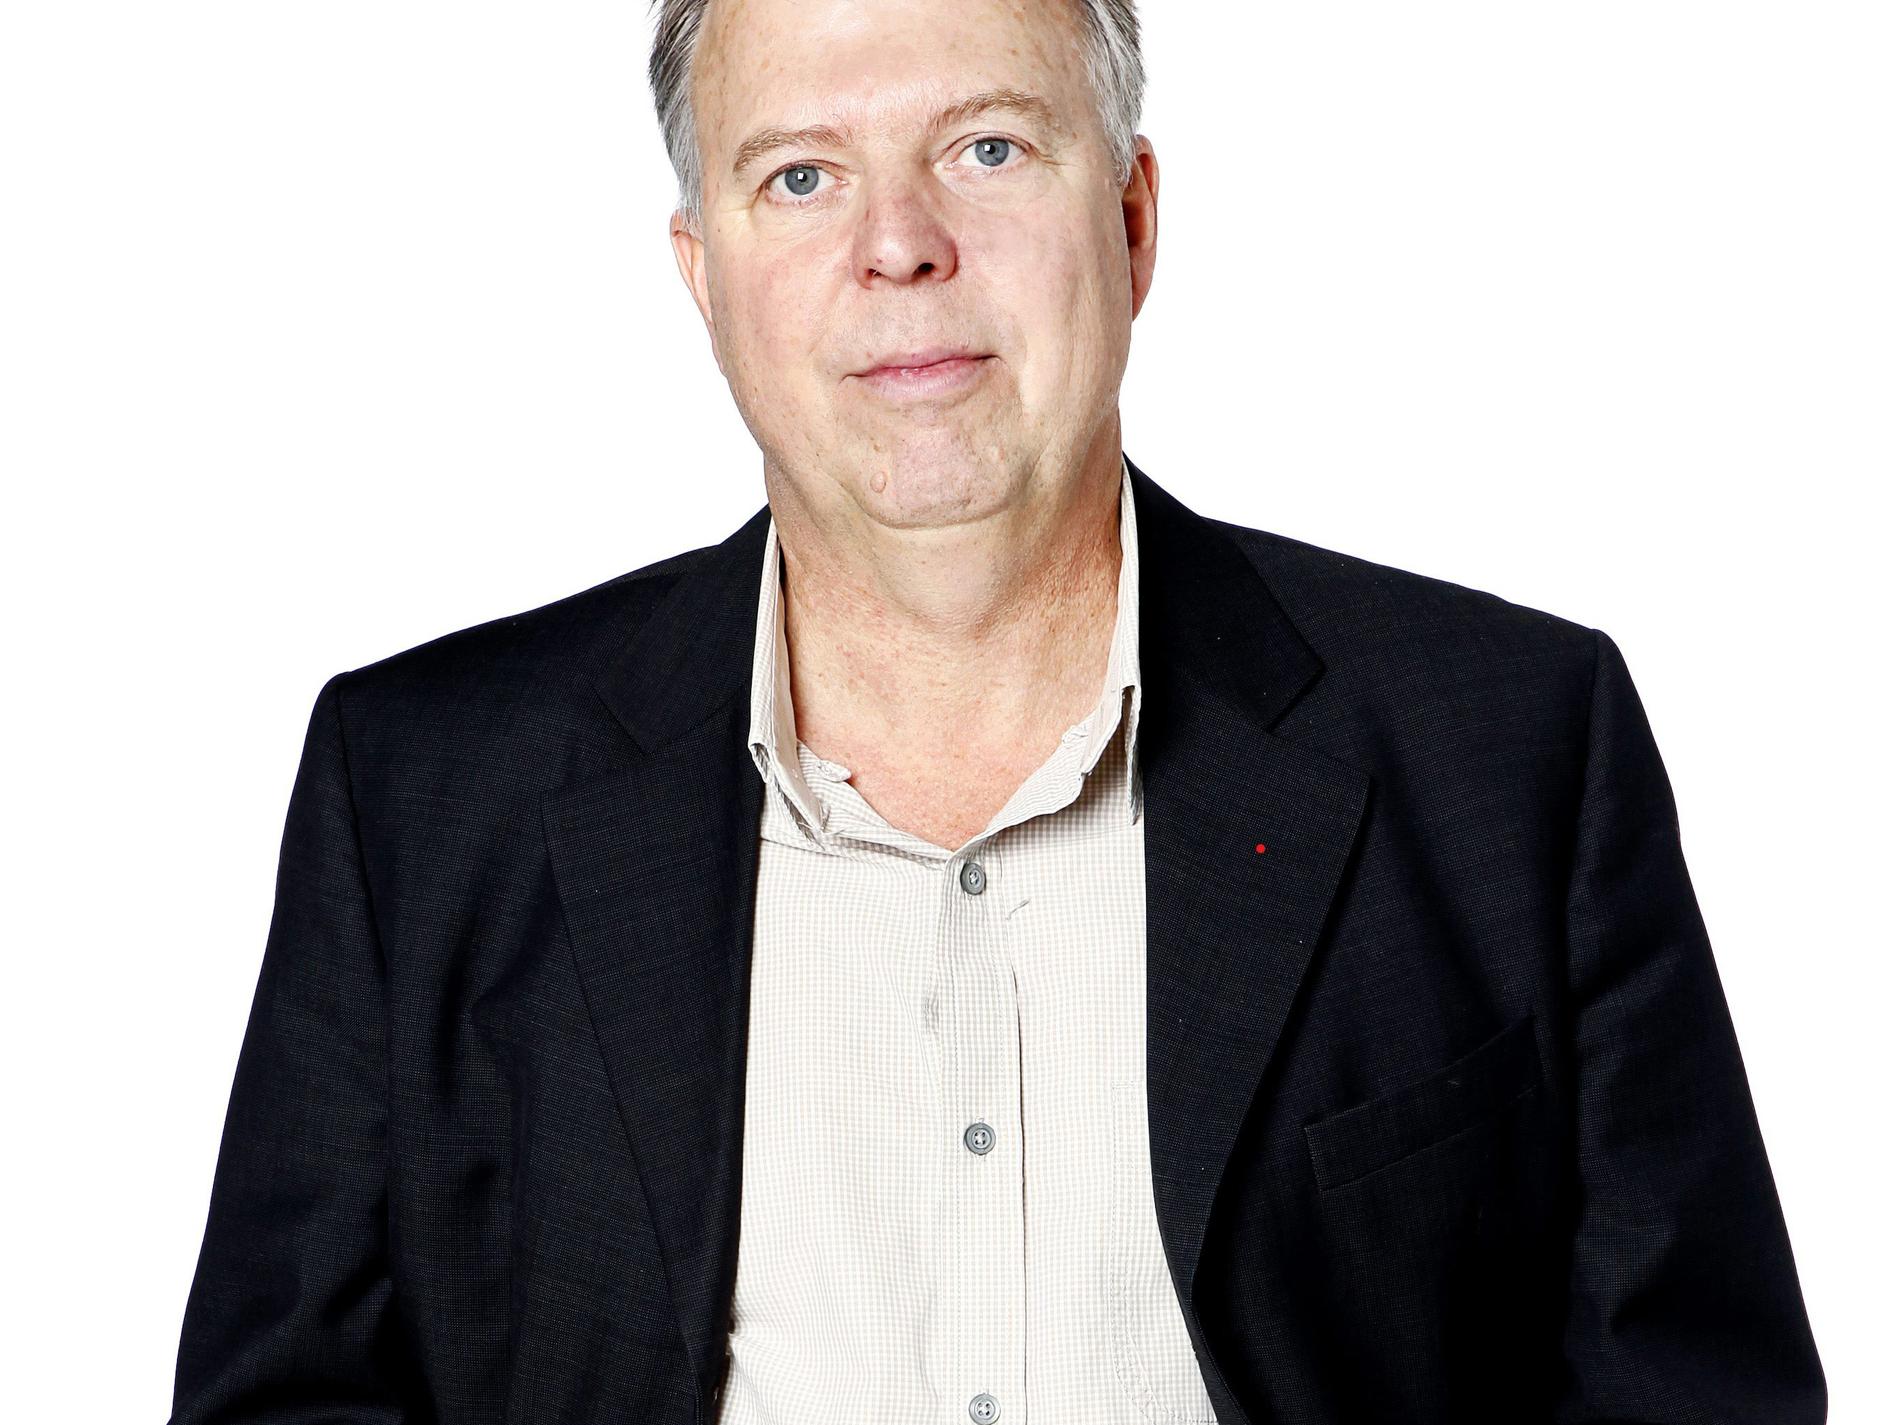 Chatta med Aftonbladets expert om konflikten